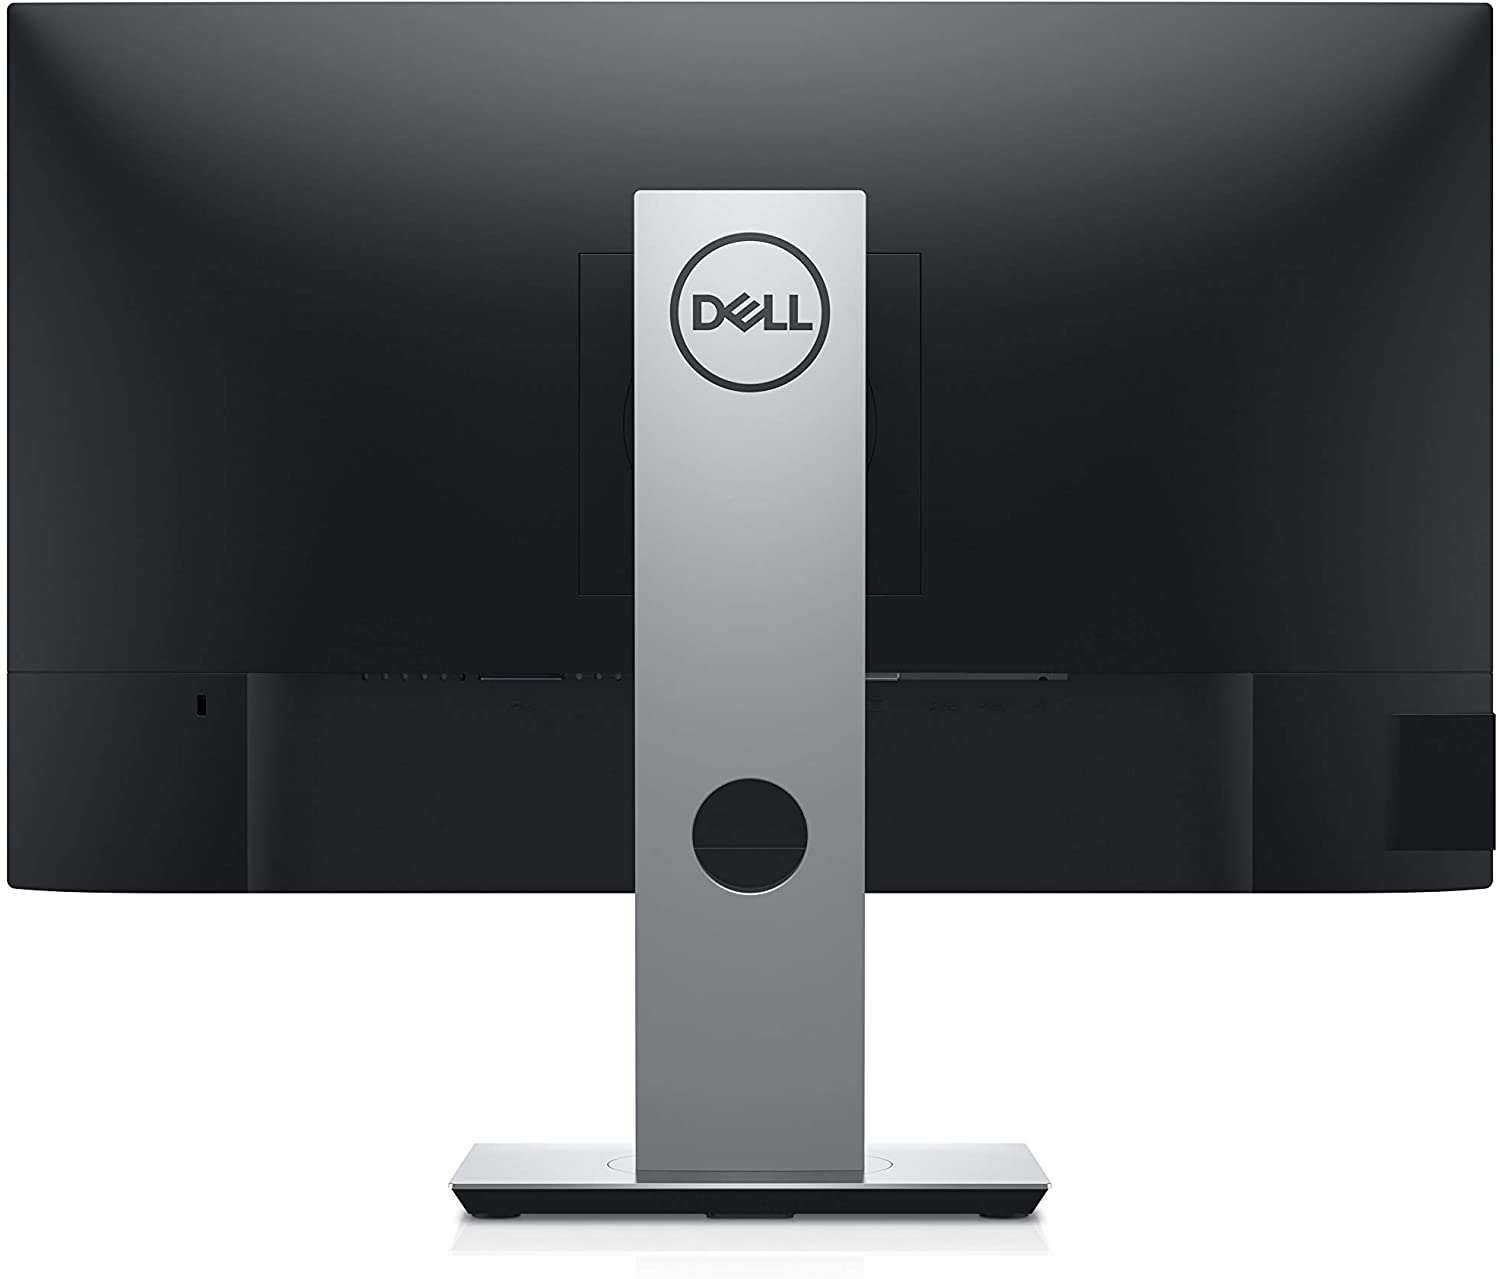 Dell P2419H LED monitor 24"- 1920 x 1080 Full HD @ 60 Hz IPS - 250 cd/m²HDMI, VGA, DisplayPort